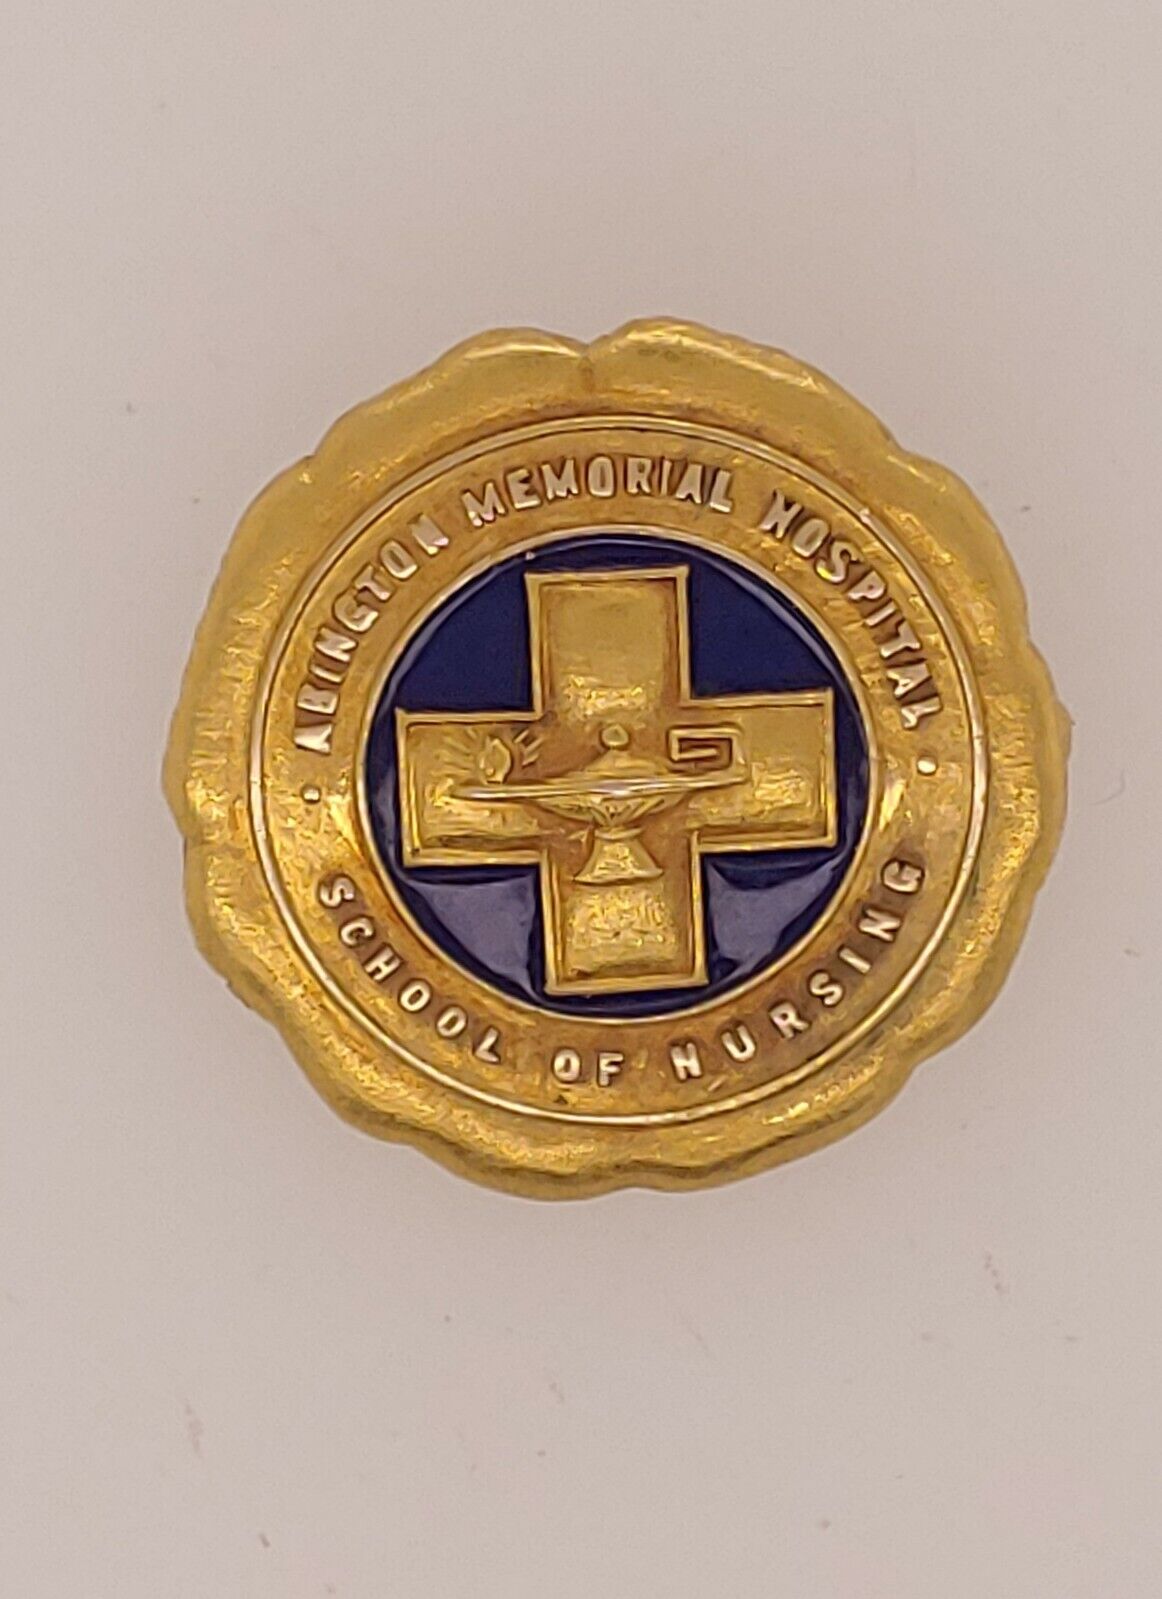 Abington Memorial School of Nursing 14K Yellow Gold Enameled Service Pin